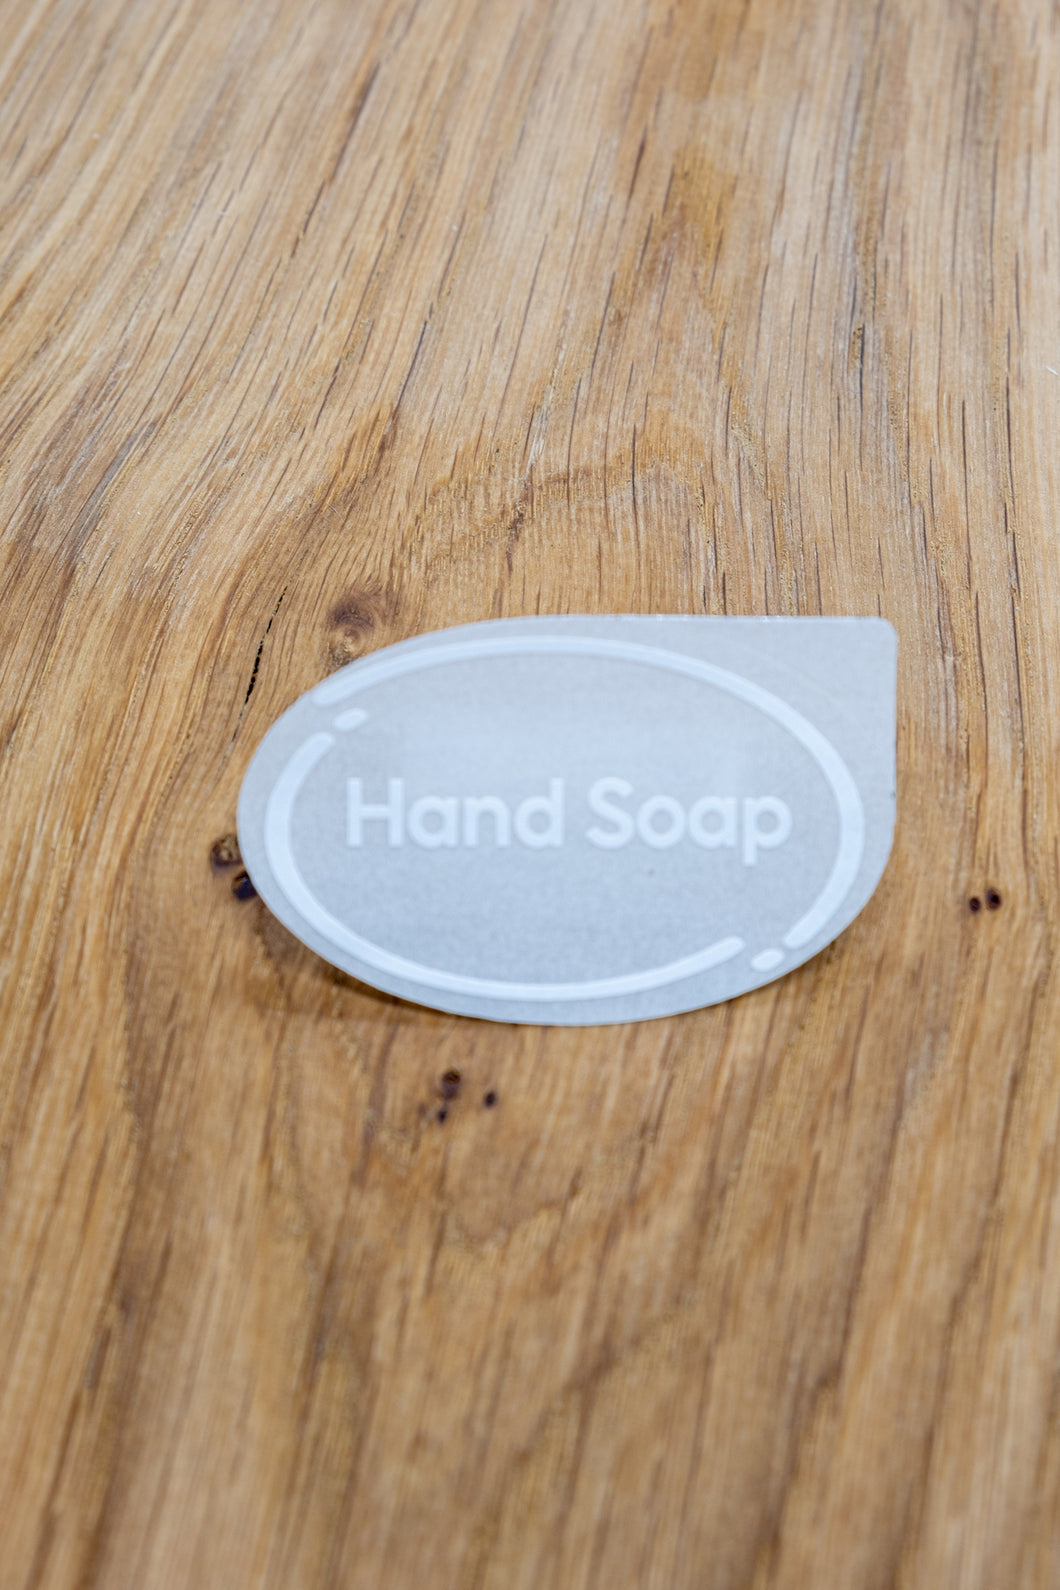 Hand Soap Label